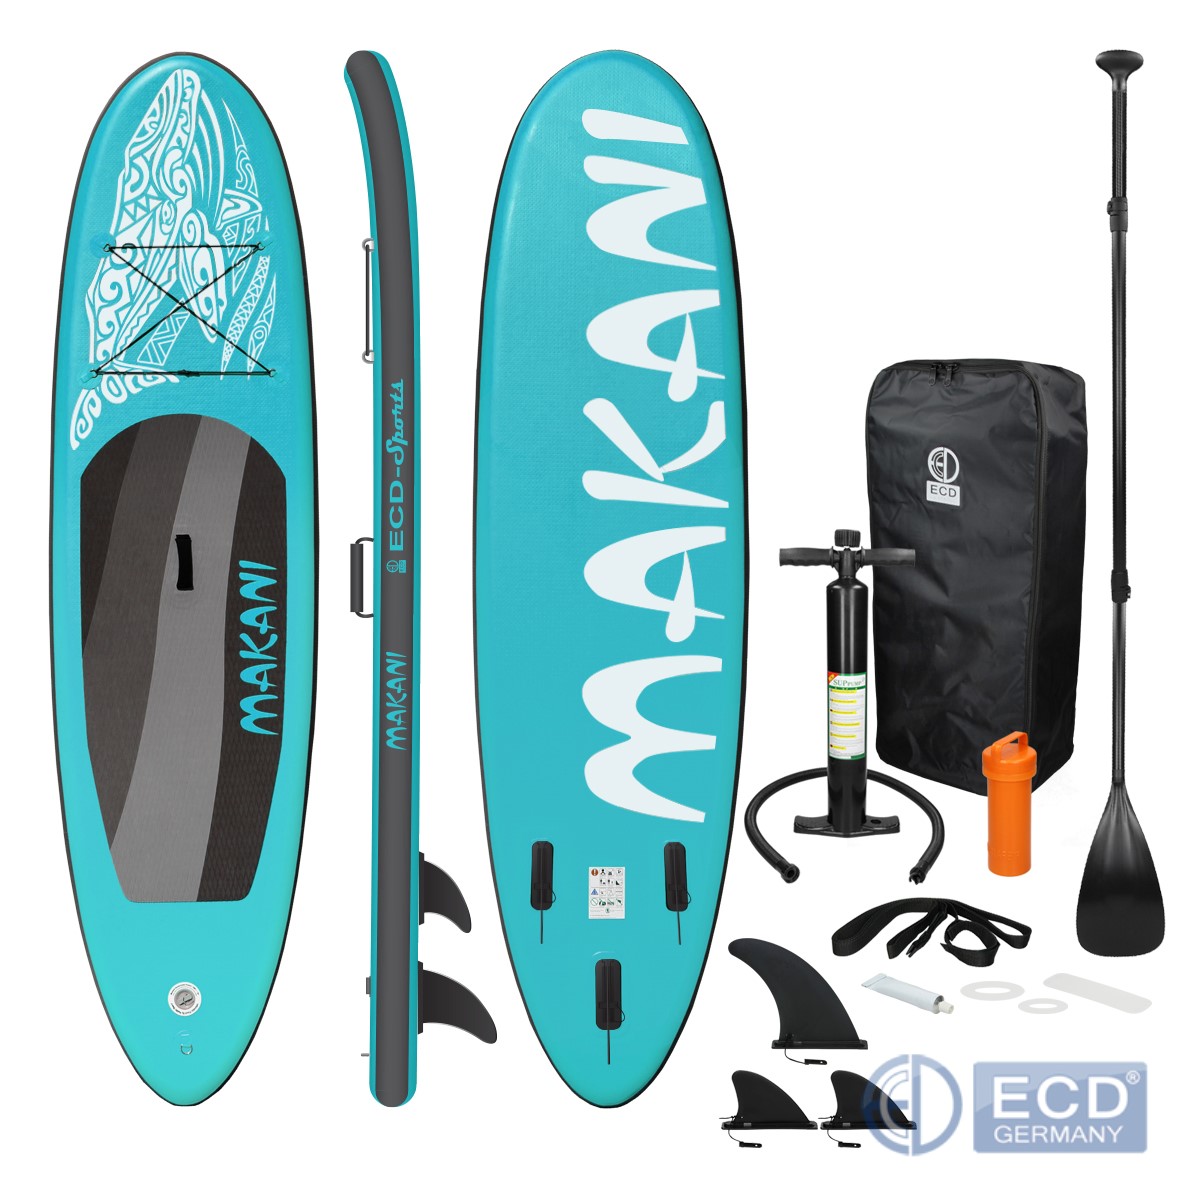 Details zu  Stand Up Paddle Board SUP Surfboard Makani Paddelboard Paddling aufblasbar 320cm Super willkommener Versandhandel